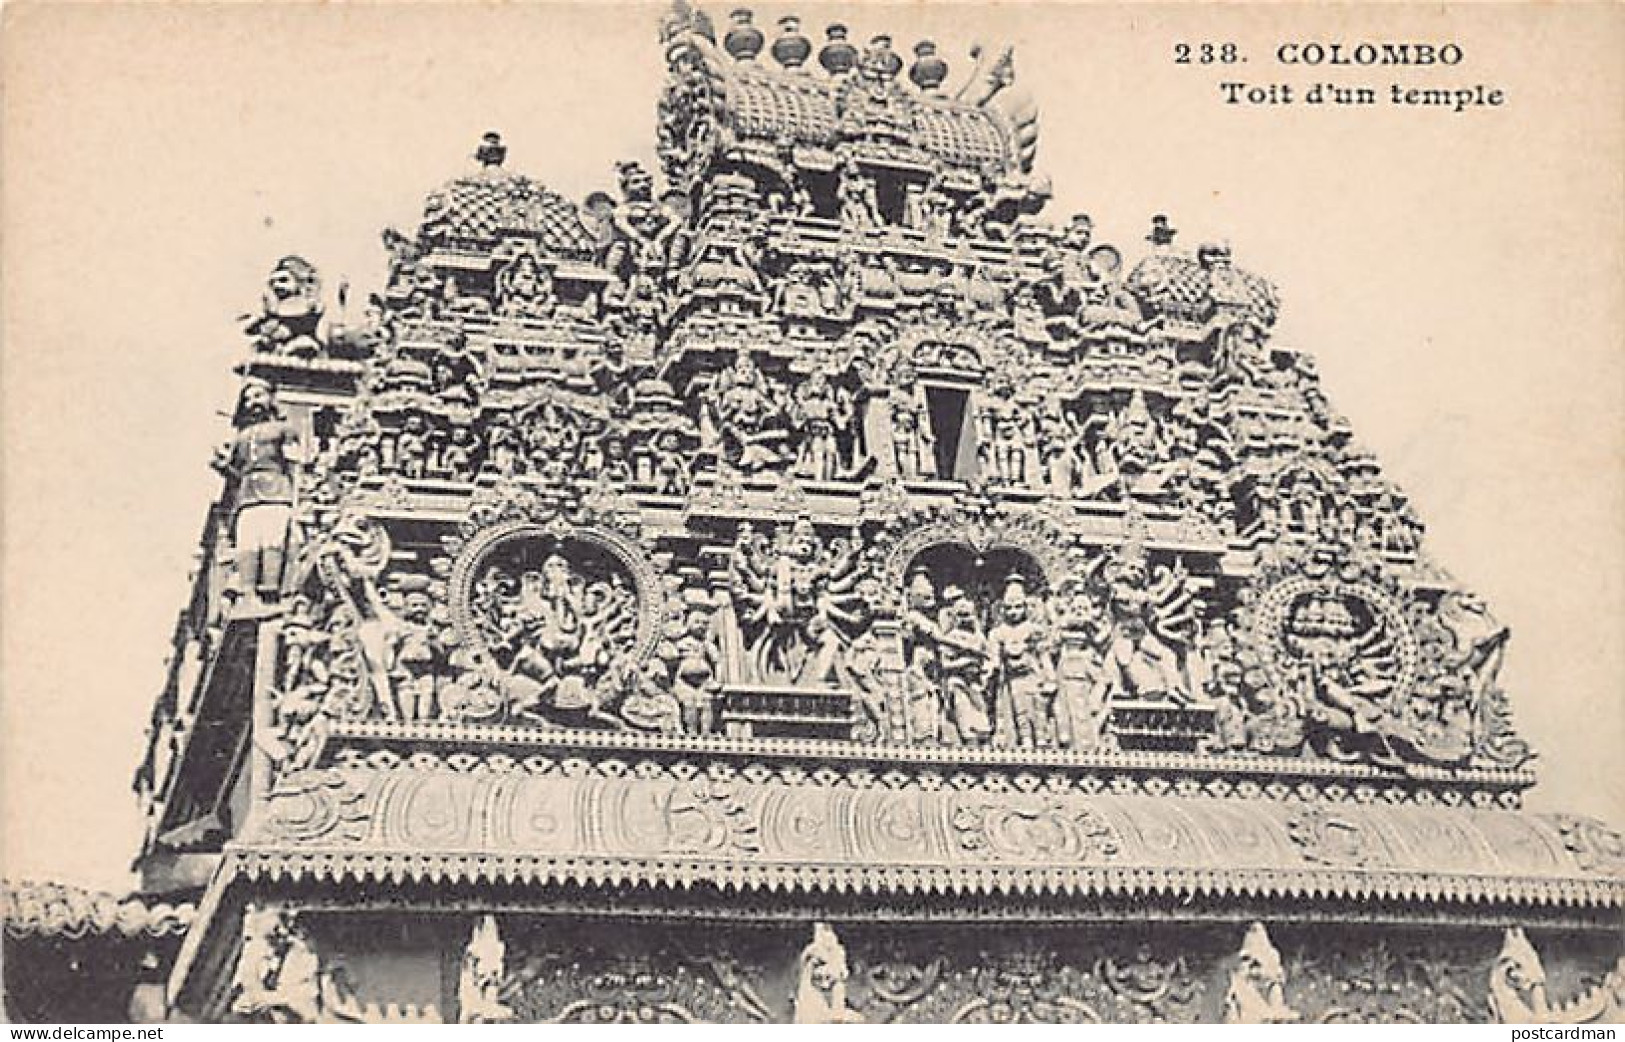 Sri Lanka - COLOMBO - Temple Roof - Publ. Messageries Maritimes 238 - Sri Lanka (Ceylon)